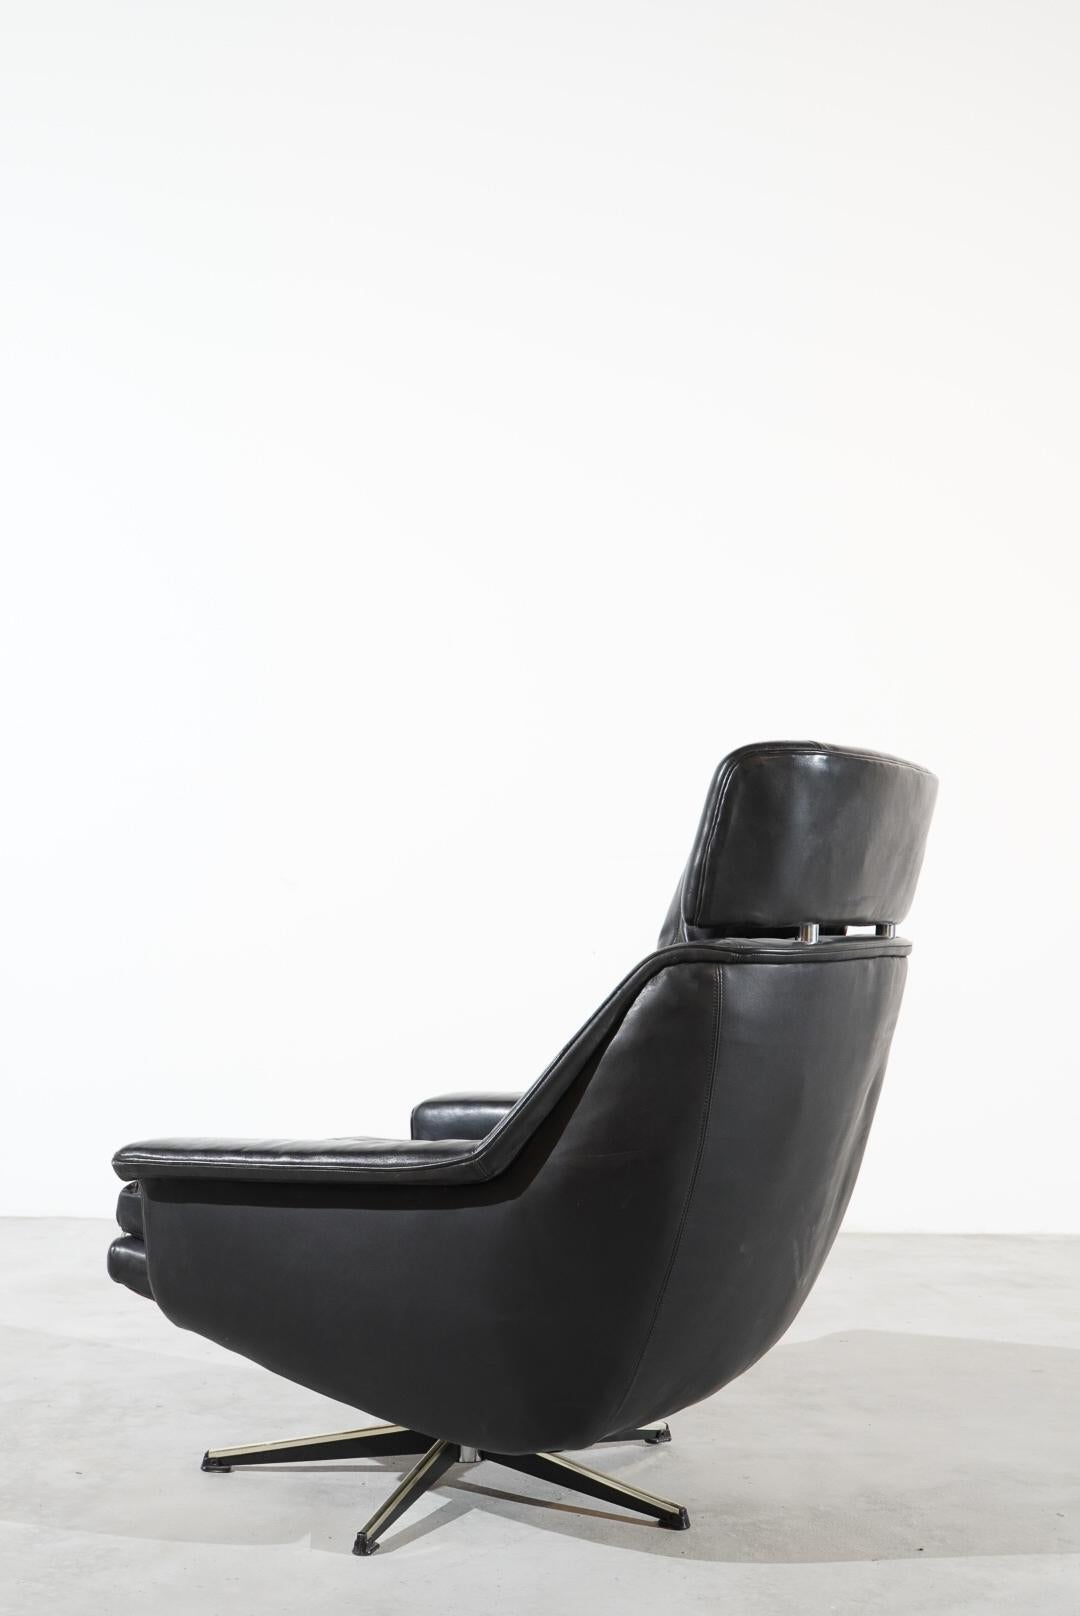 20th Century Werner Langenfeld Model 802 Esa Møbelværk Leather Lounge Chair + Ottoman For Sale